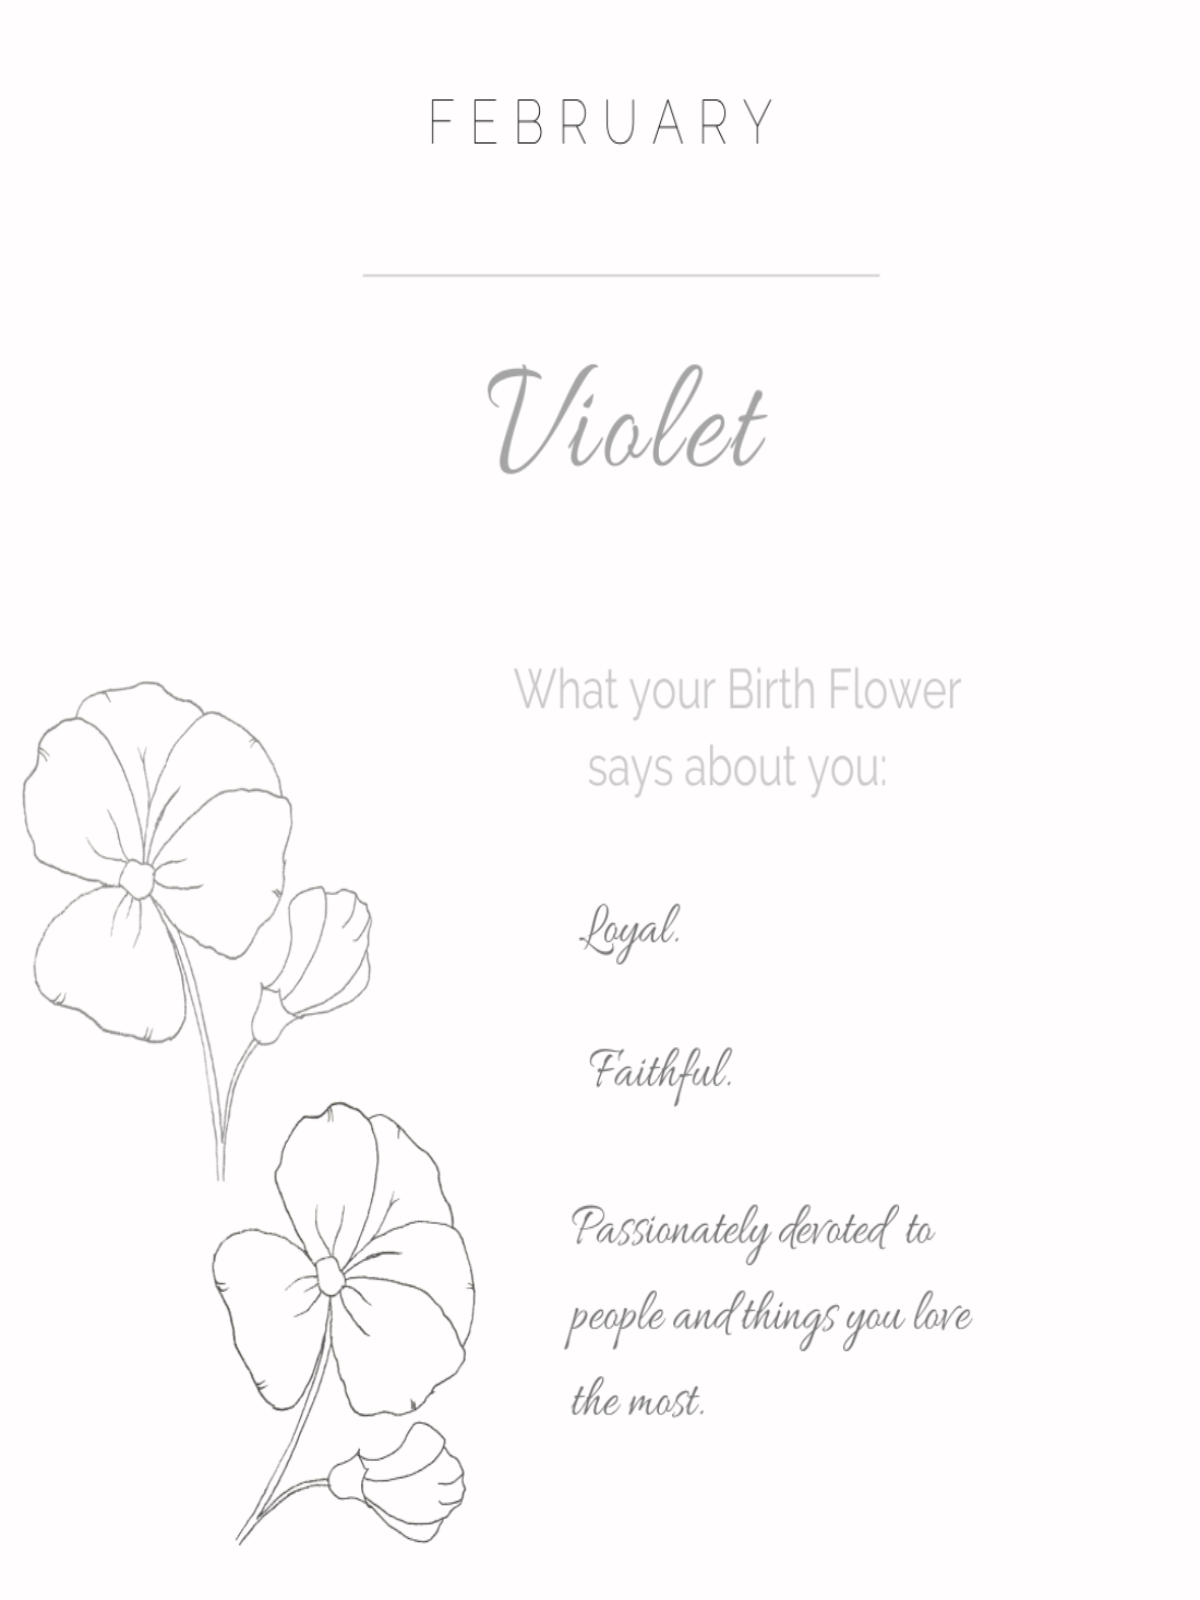 Violet - February Birthflower